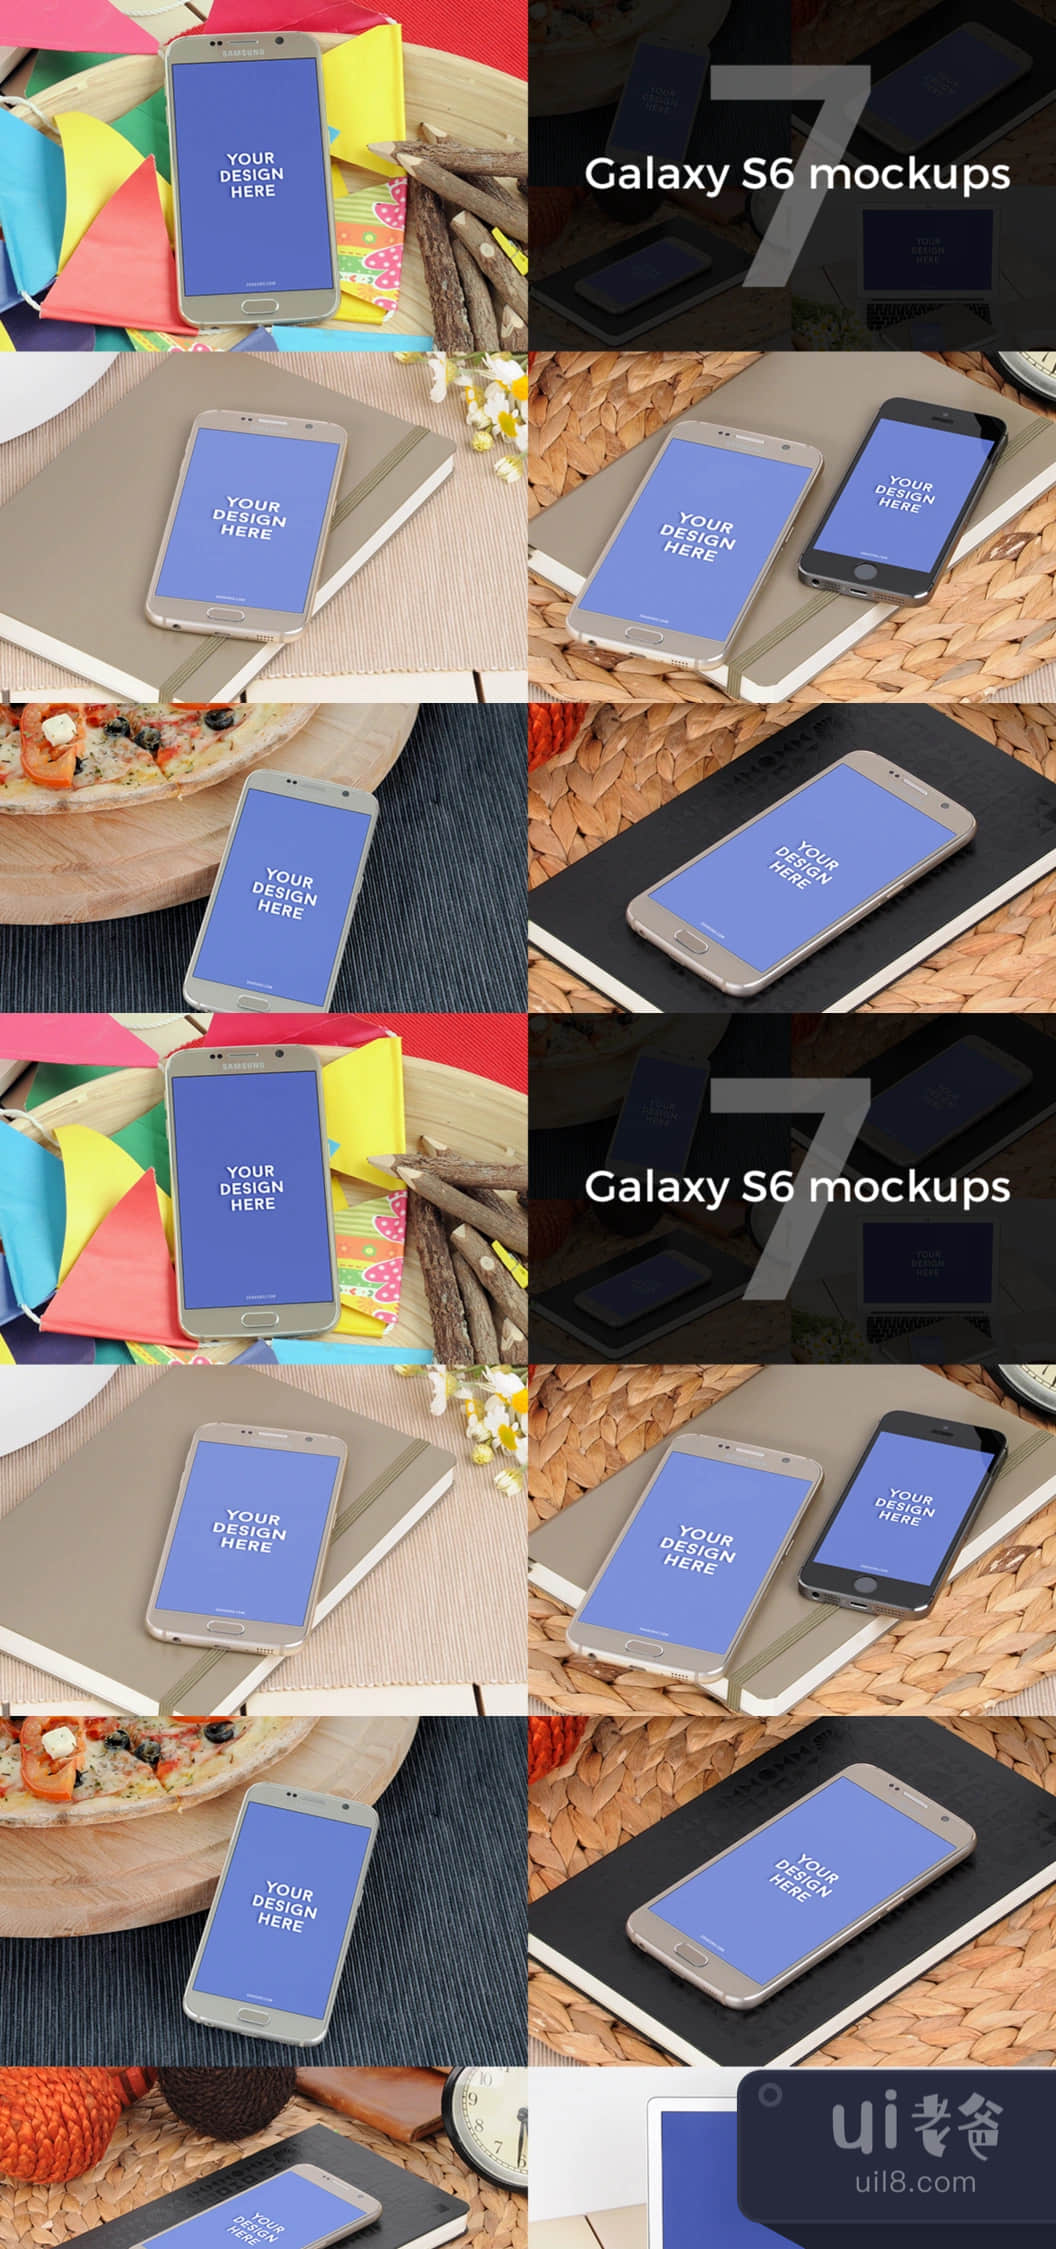 7个三星Galaxy S6模拟图 (7 Samsung Galaxy S6 mockups)插图